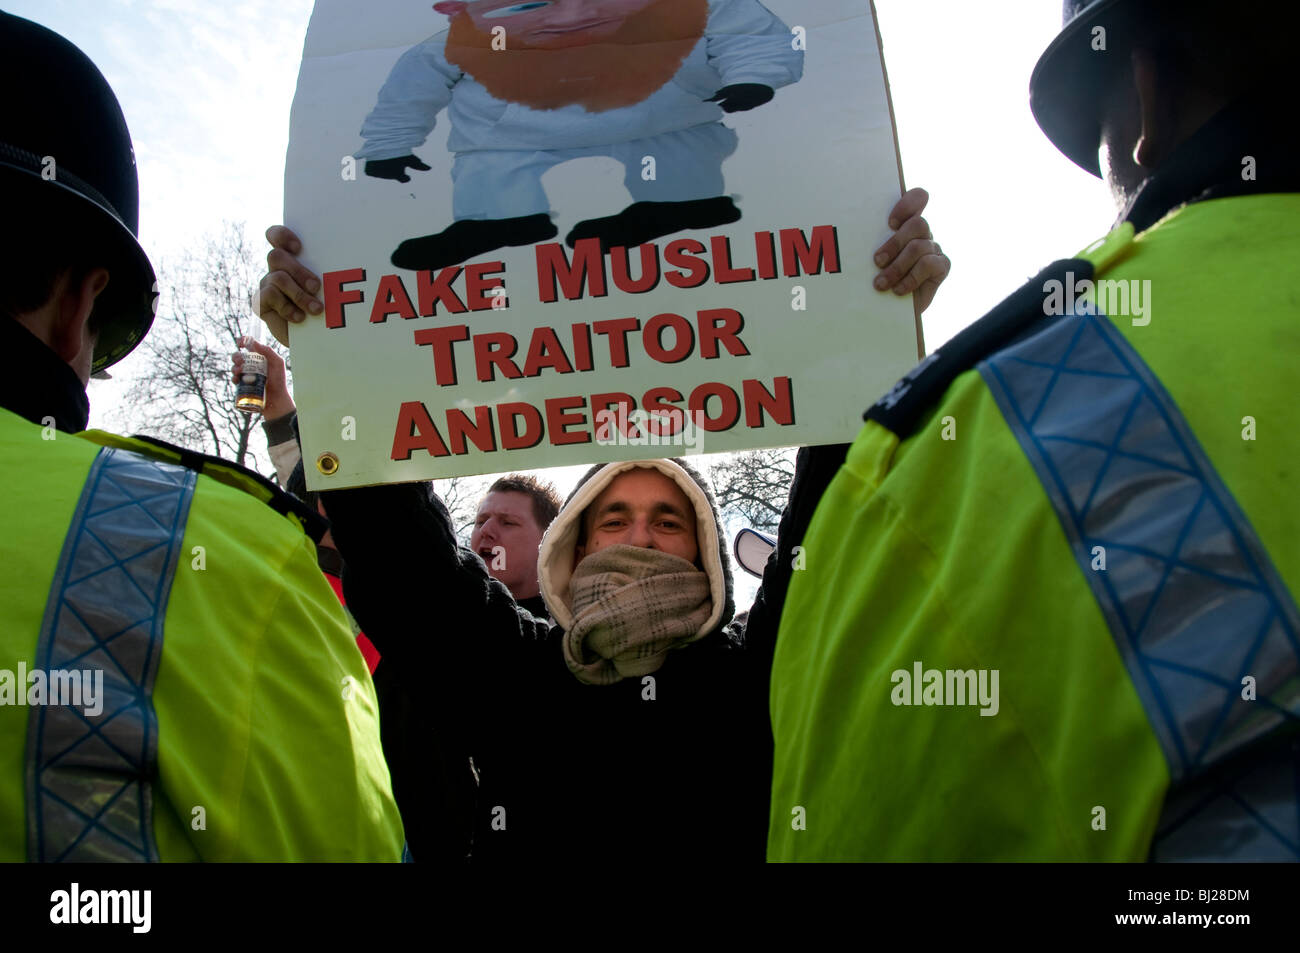 Inglese Lega di difesa ( EDL ) marzo a Londra a sostegno di estrema destra olandese candidato Islamophobic Geert Wilders. Foto Stock